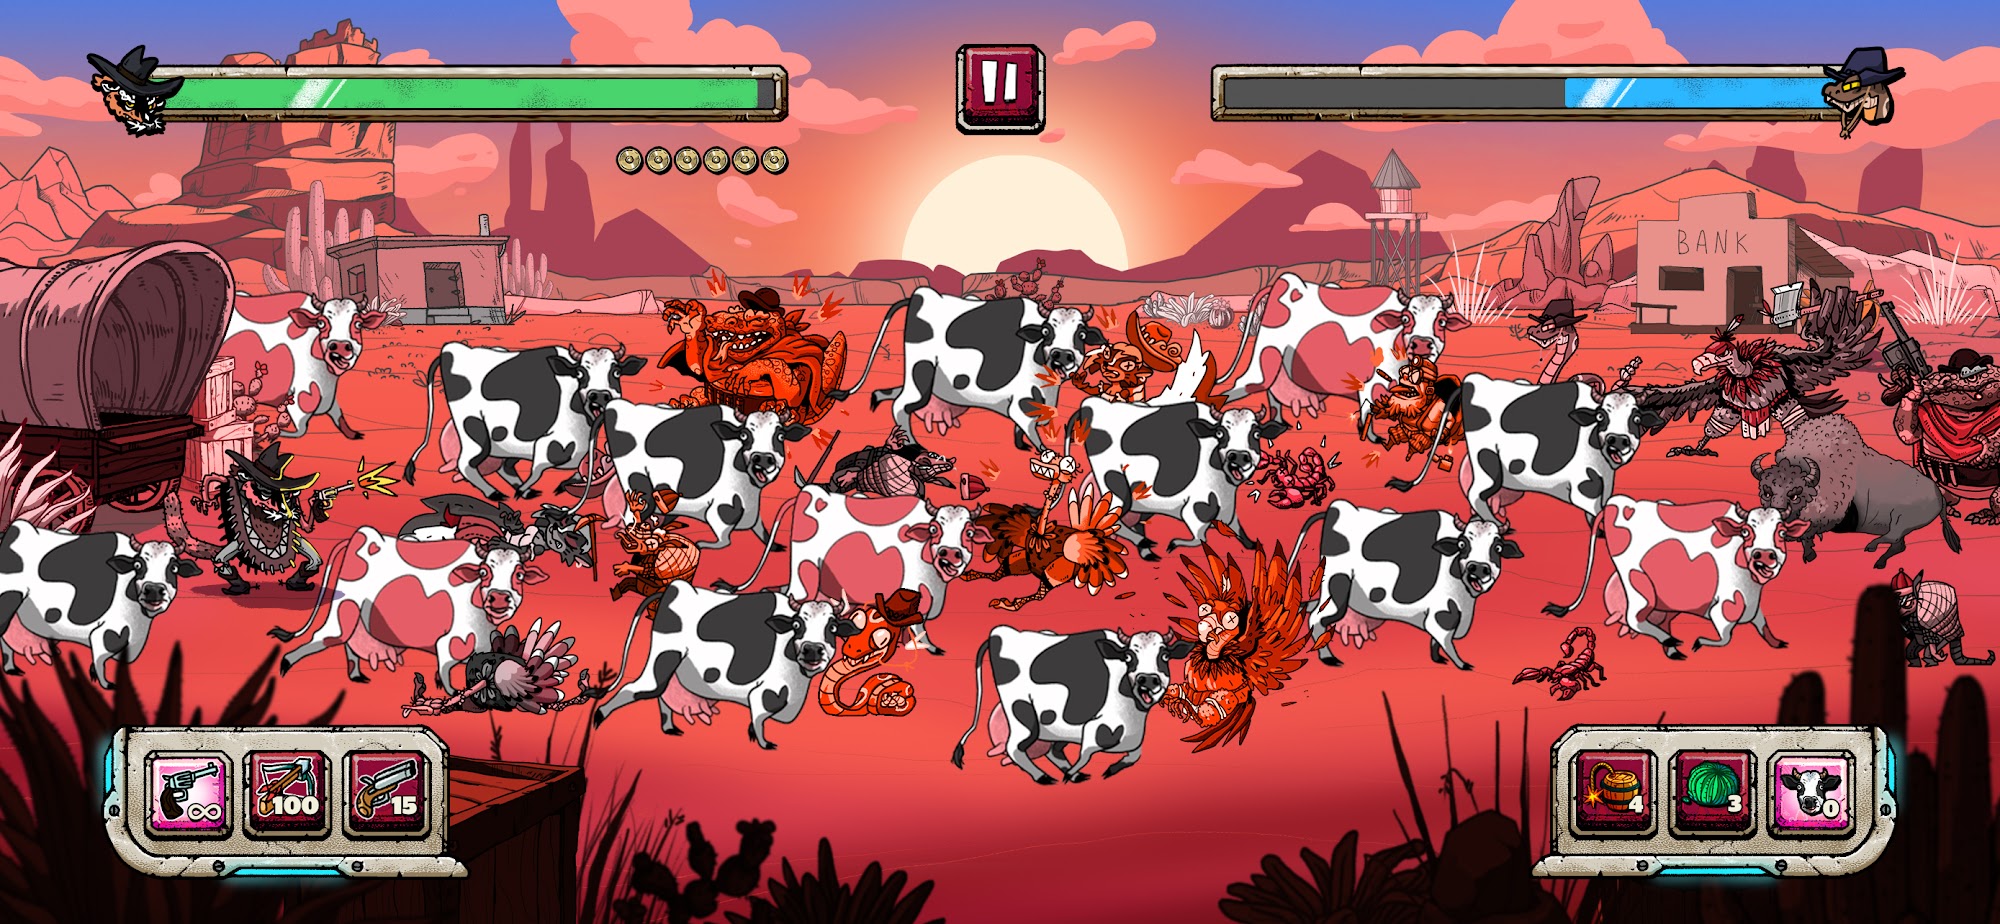 Cowboys Galaxy Adventures - Android game screenshots.